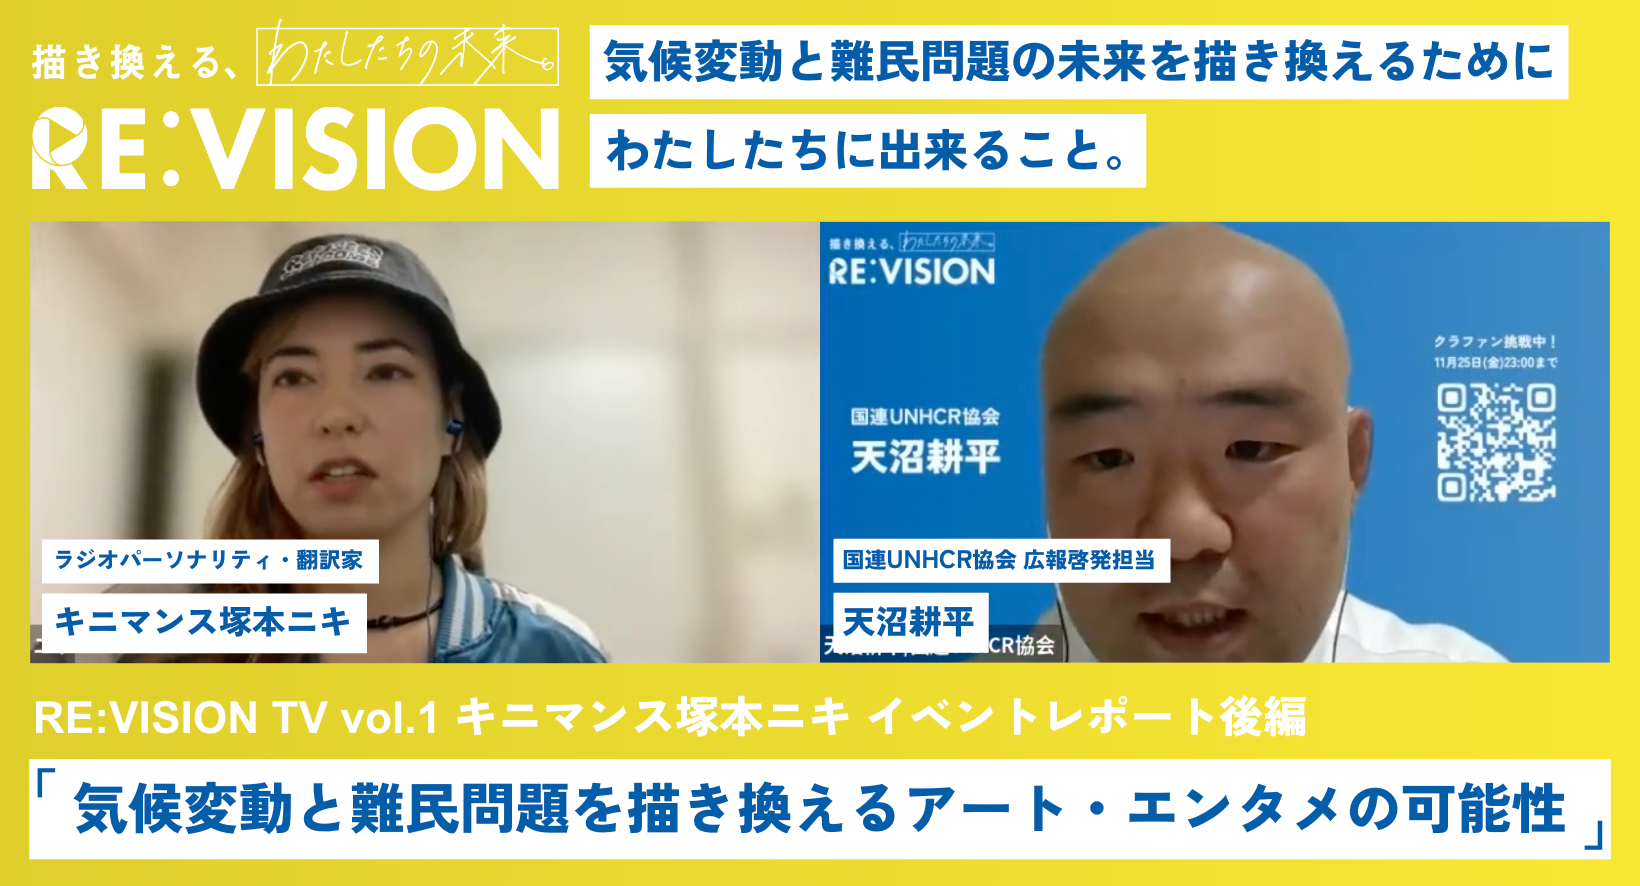 RE:VISION TV vol.1 イベントレポート【後編】